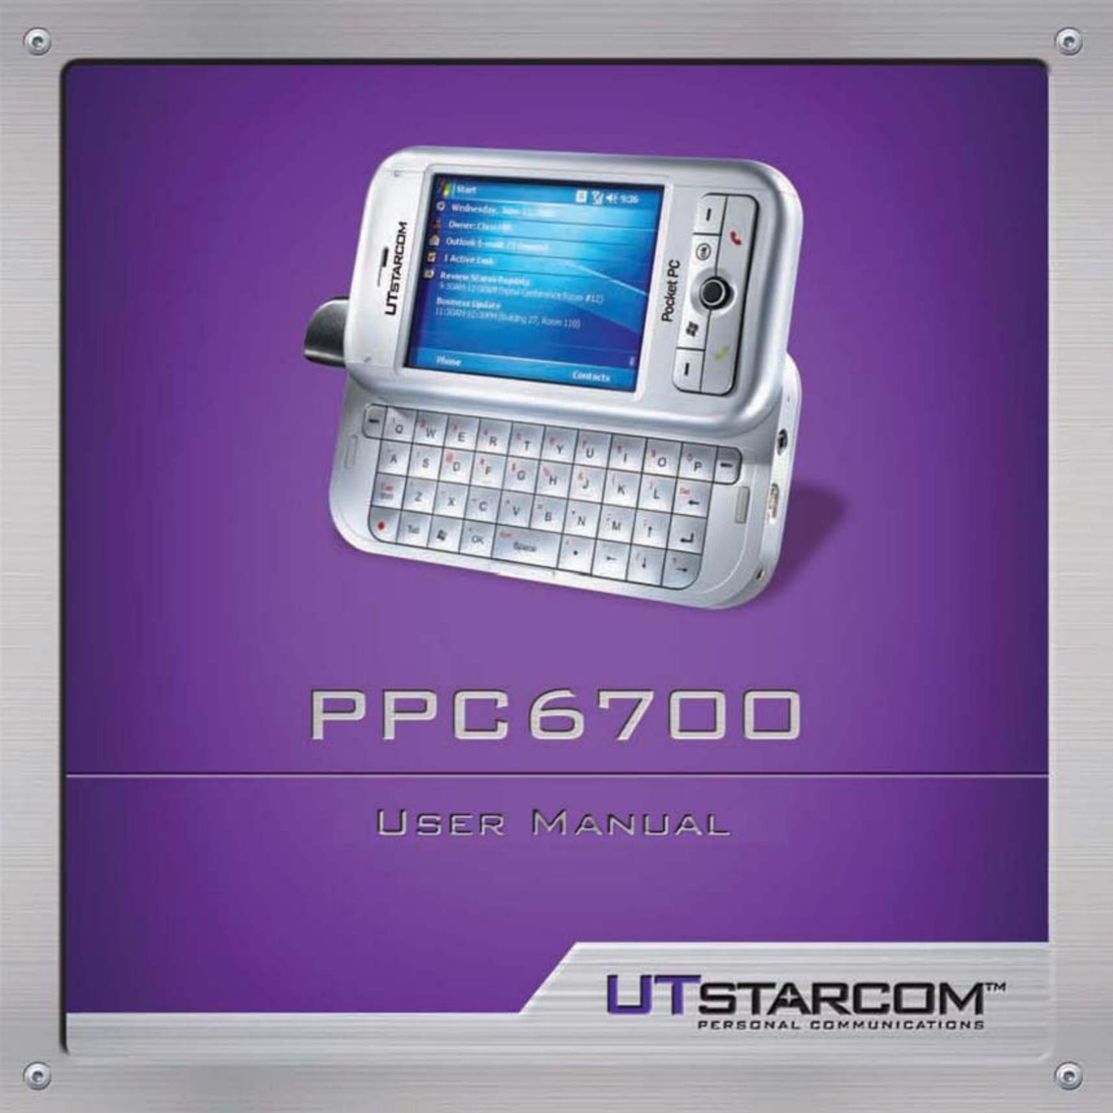 UTStarcom PPC 6700 PDAs & Smartphones User Manual